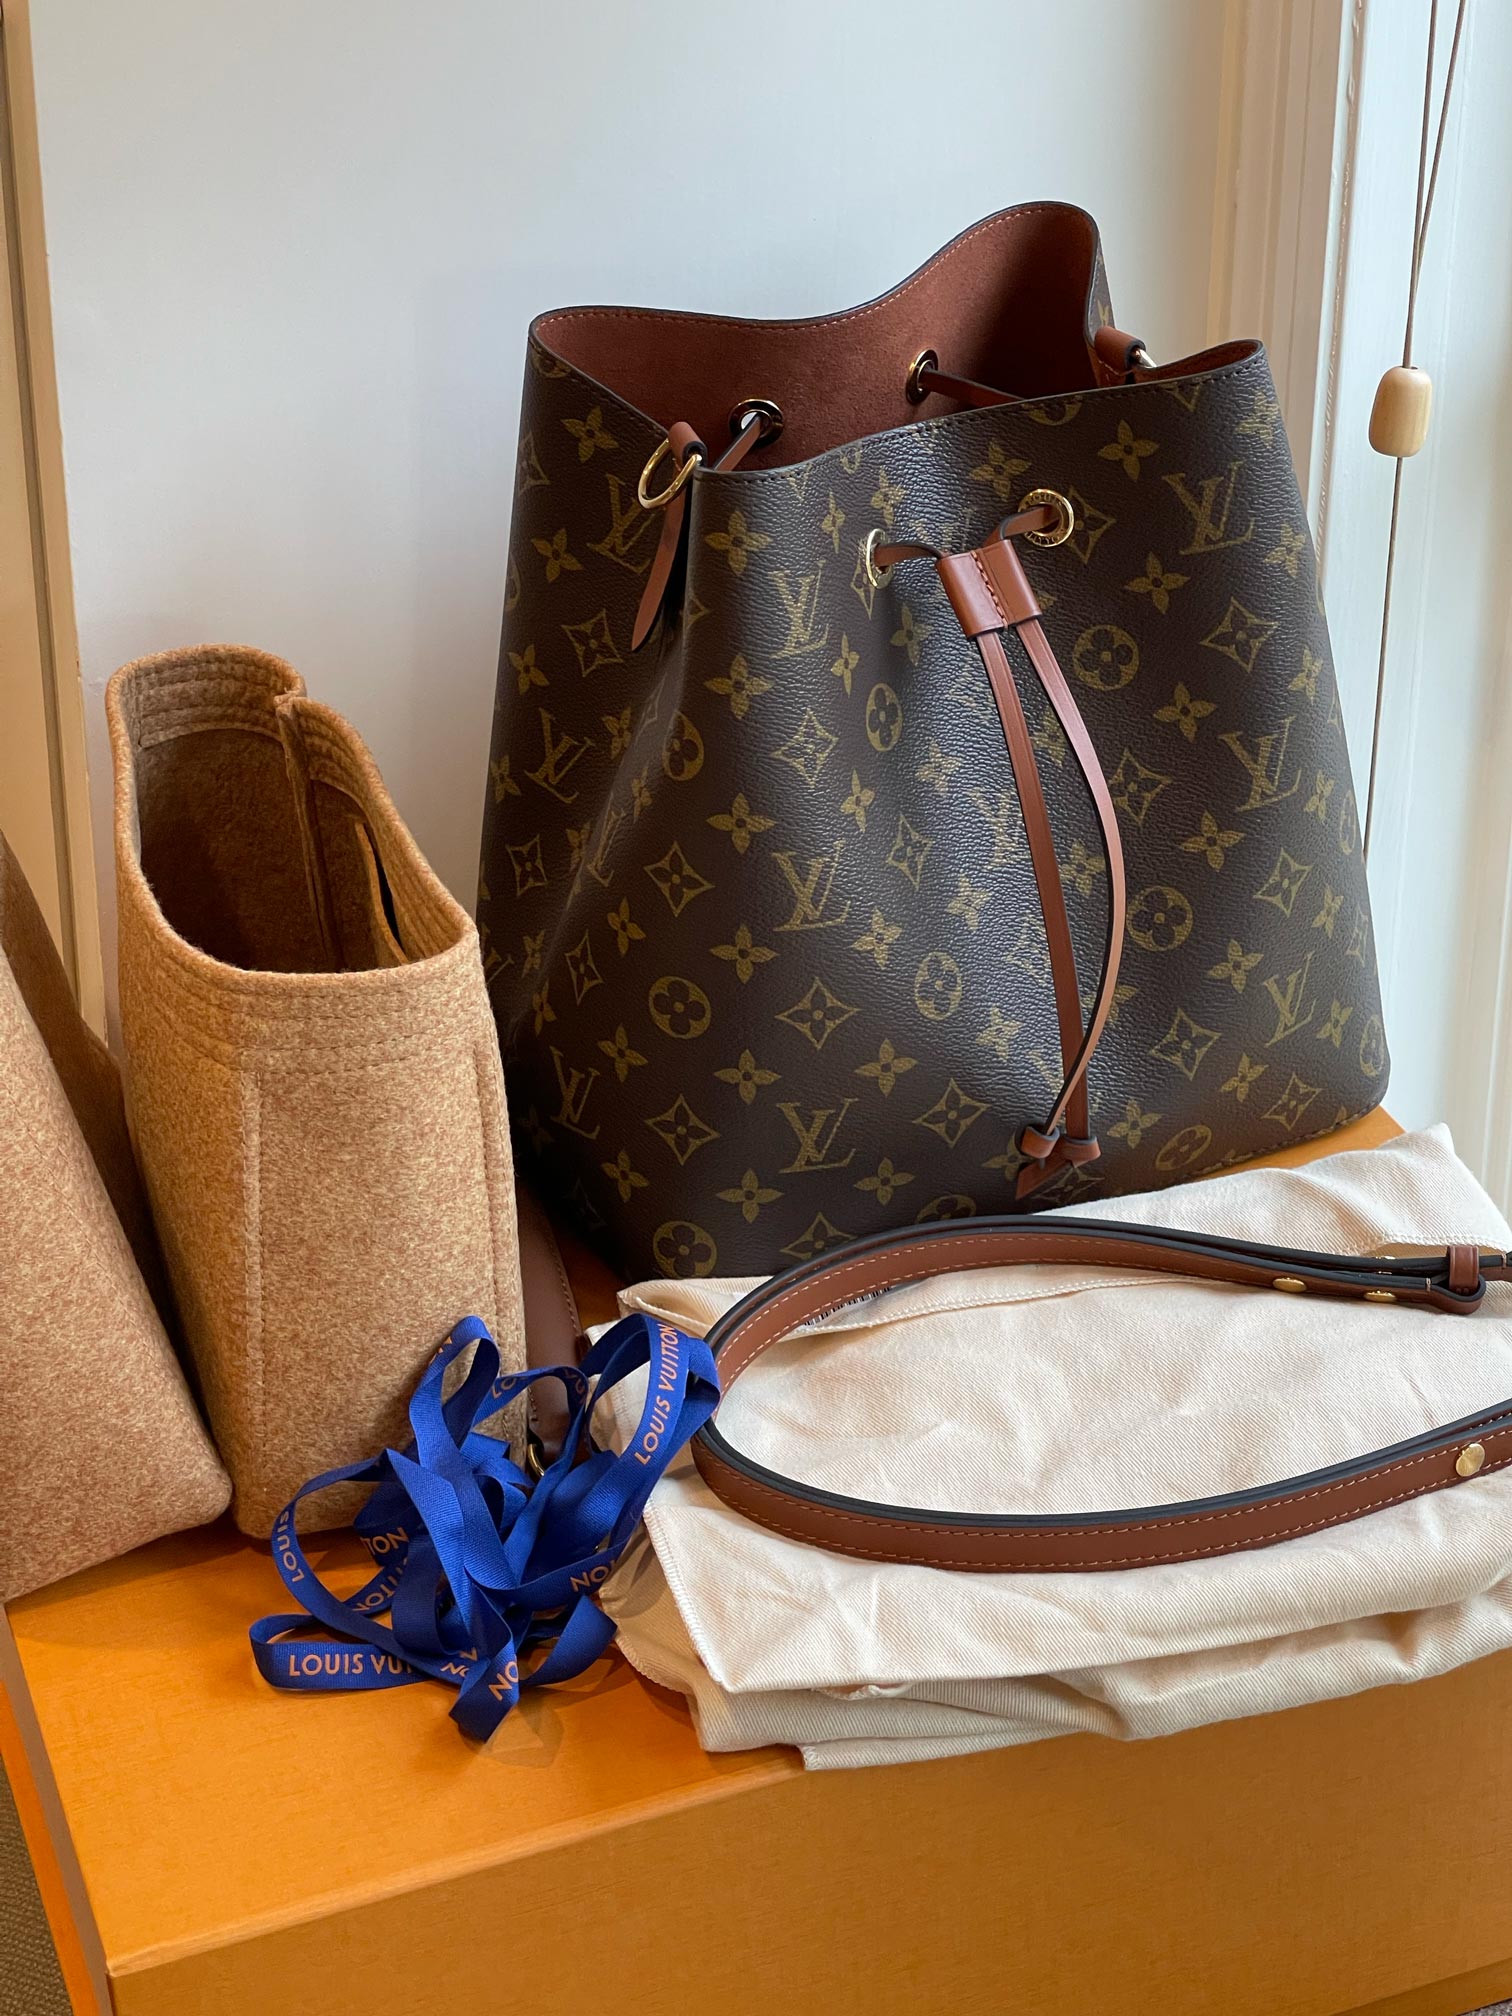 Preloved Bags Authentic on Instagram: Louis Vuitton Neonoe Caramel Full  set ori receipt. Excellent